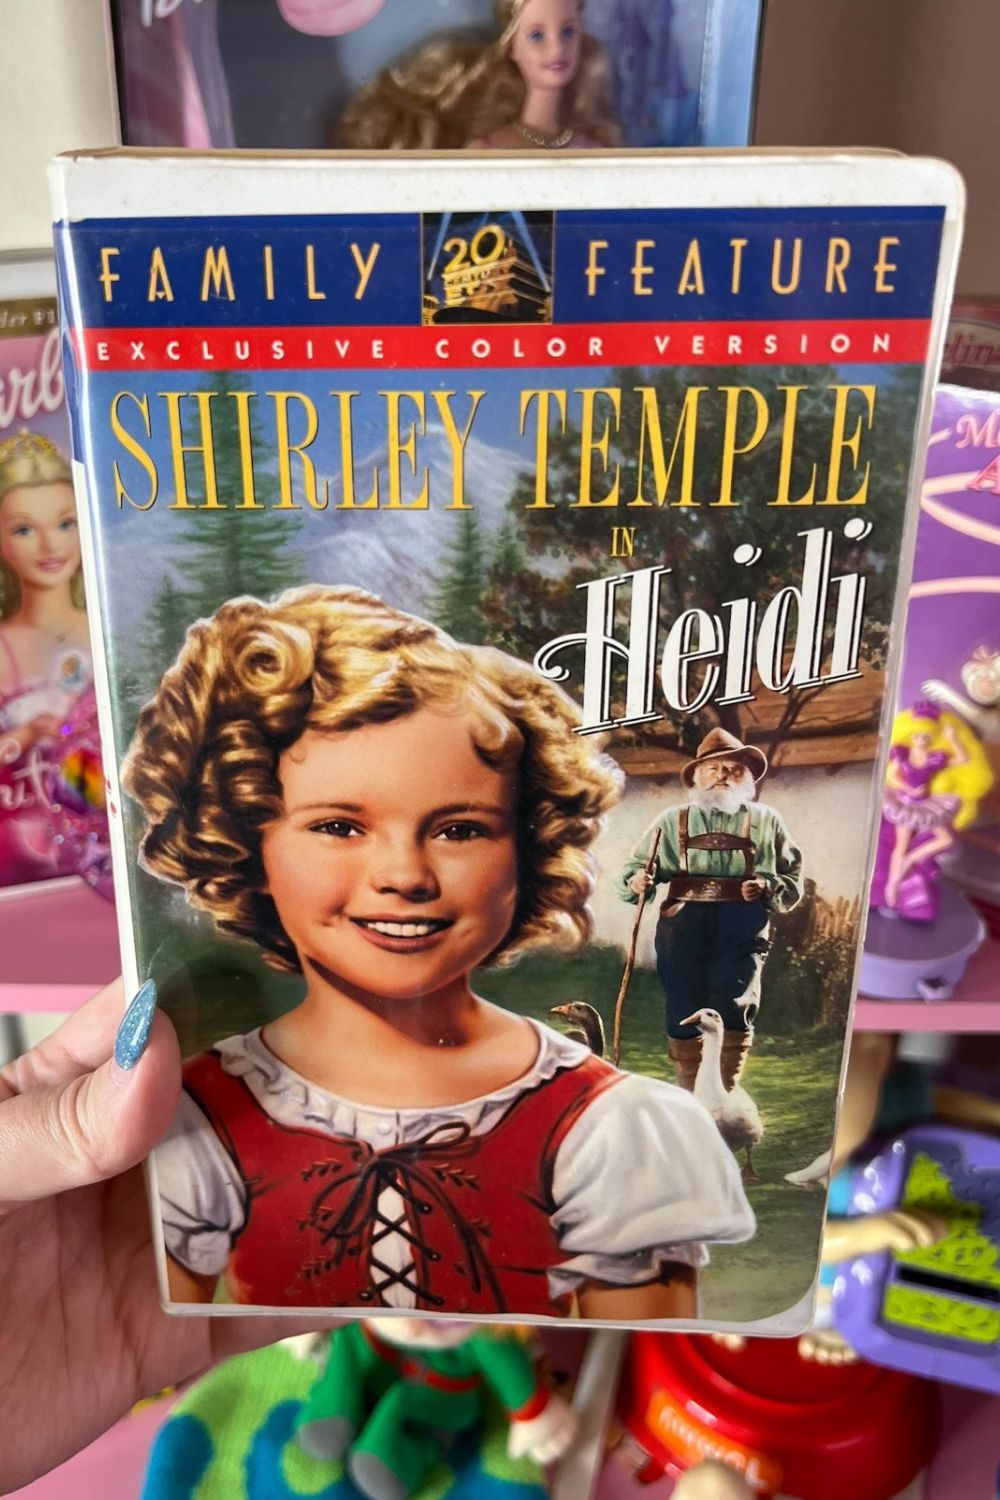 SHIRLEY TEMPLE: HEIDI VHS*